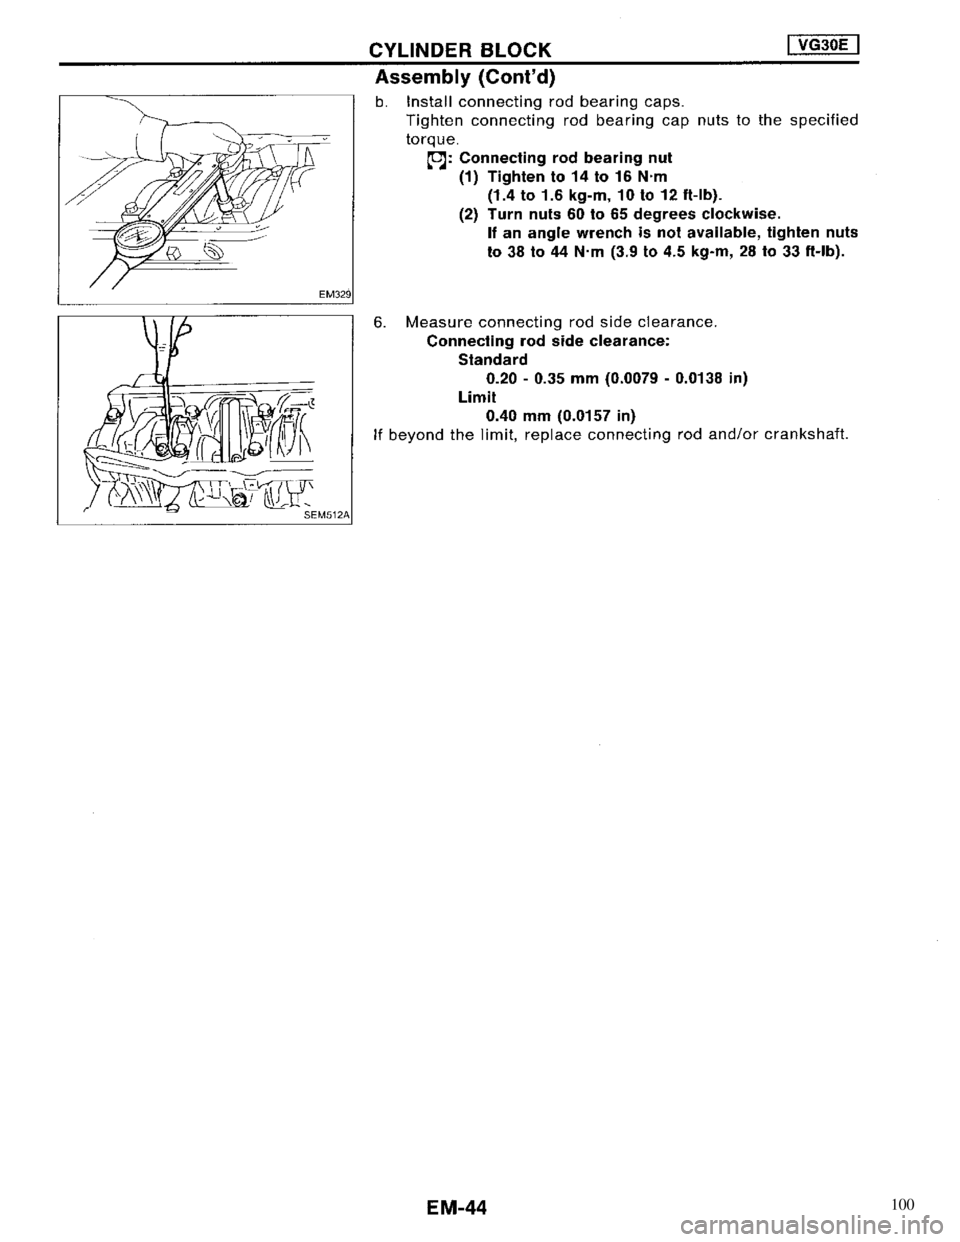 NISSAN MAXIMA 1994 A32 / 4.G Engine Mechanical Service Manual 100 